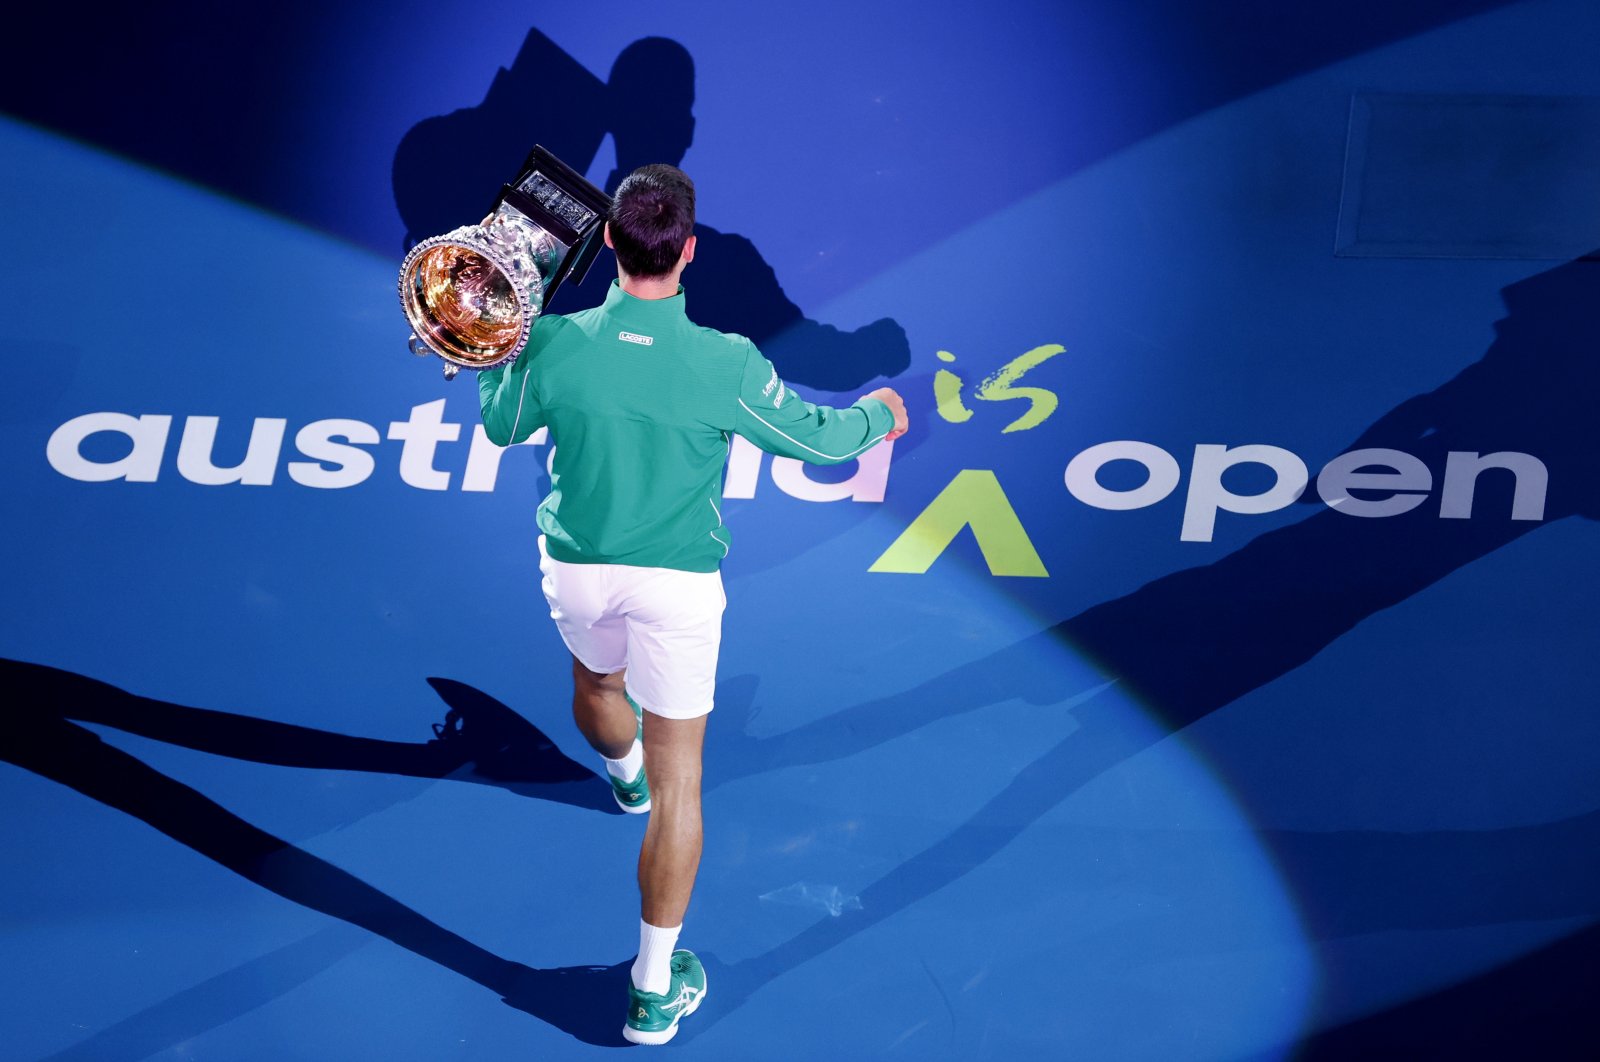 Novak Djokovic holds his trophy after winning the Australian Open tennis tournament, in Melbourne, Australia, Feb. 3, 2020. (AP Photo)